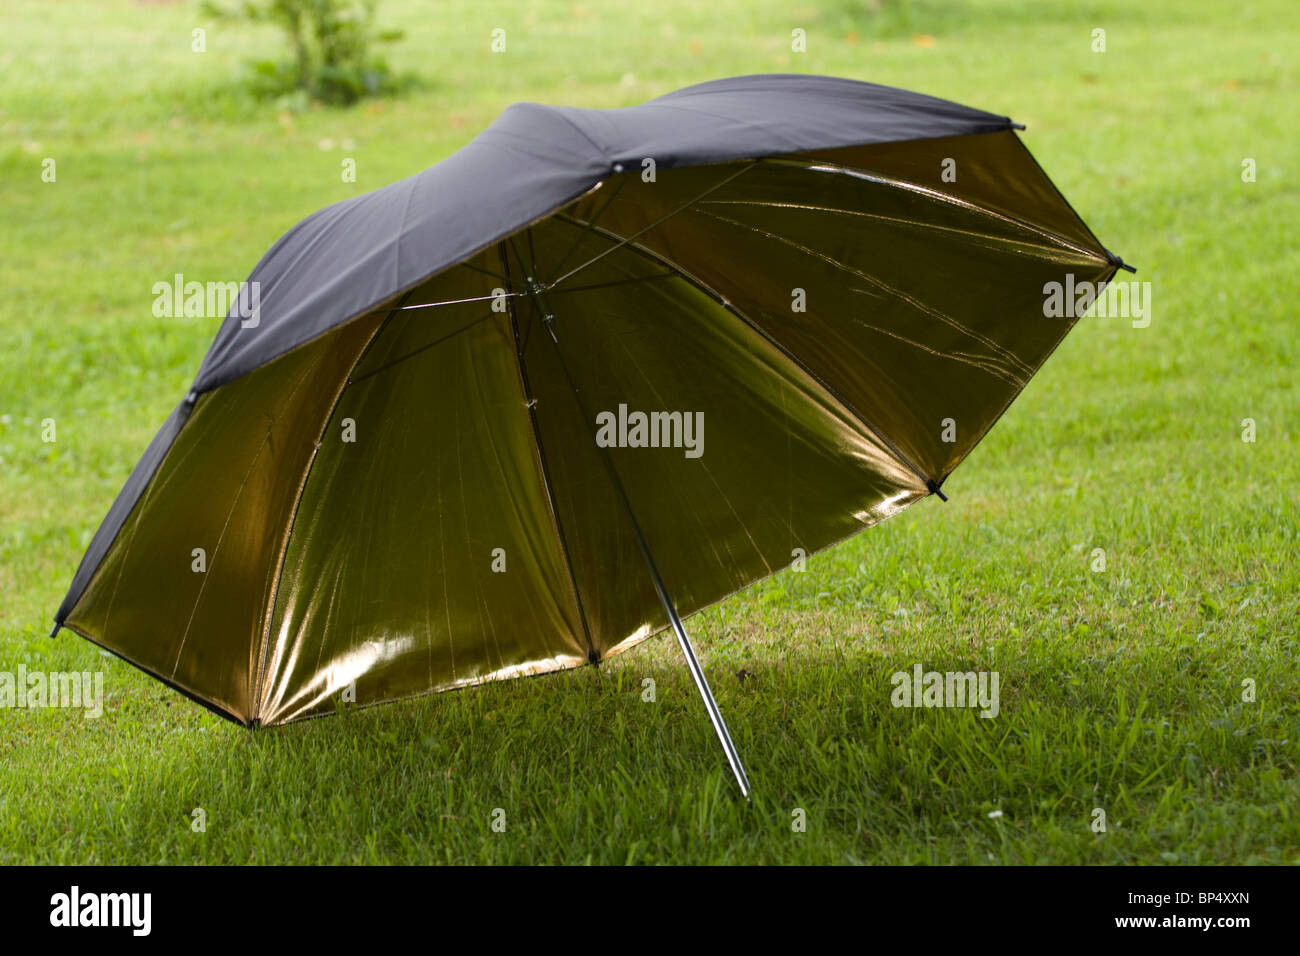 Studio photography black and gold reflecting umbrella on grass. Stock Photo